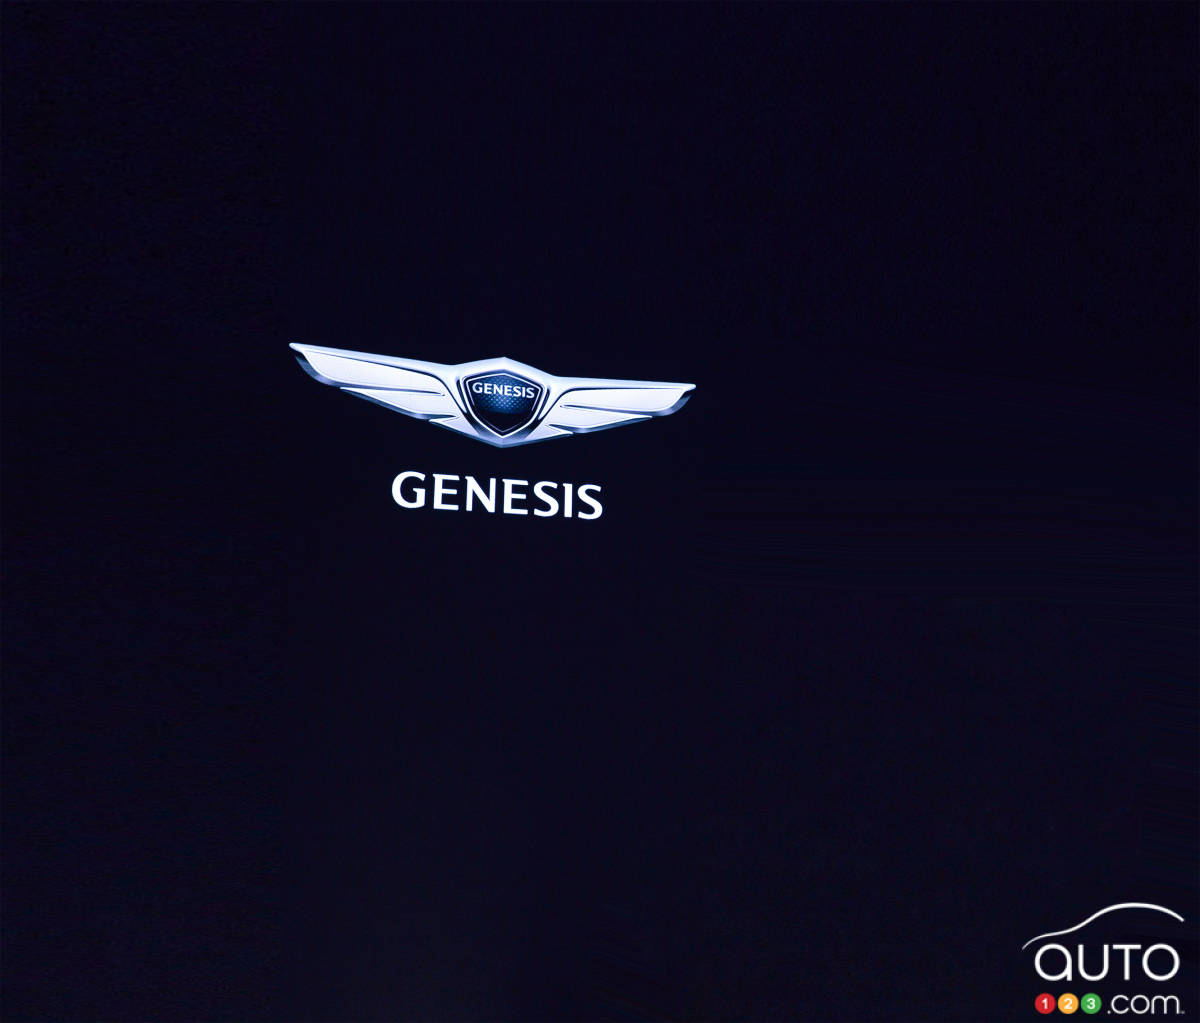 Hyundai makes Genesis its new global luxury brand